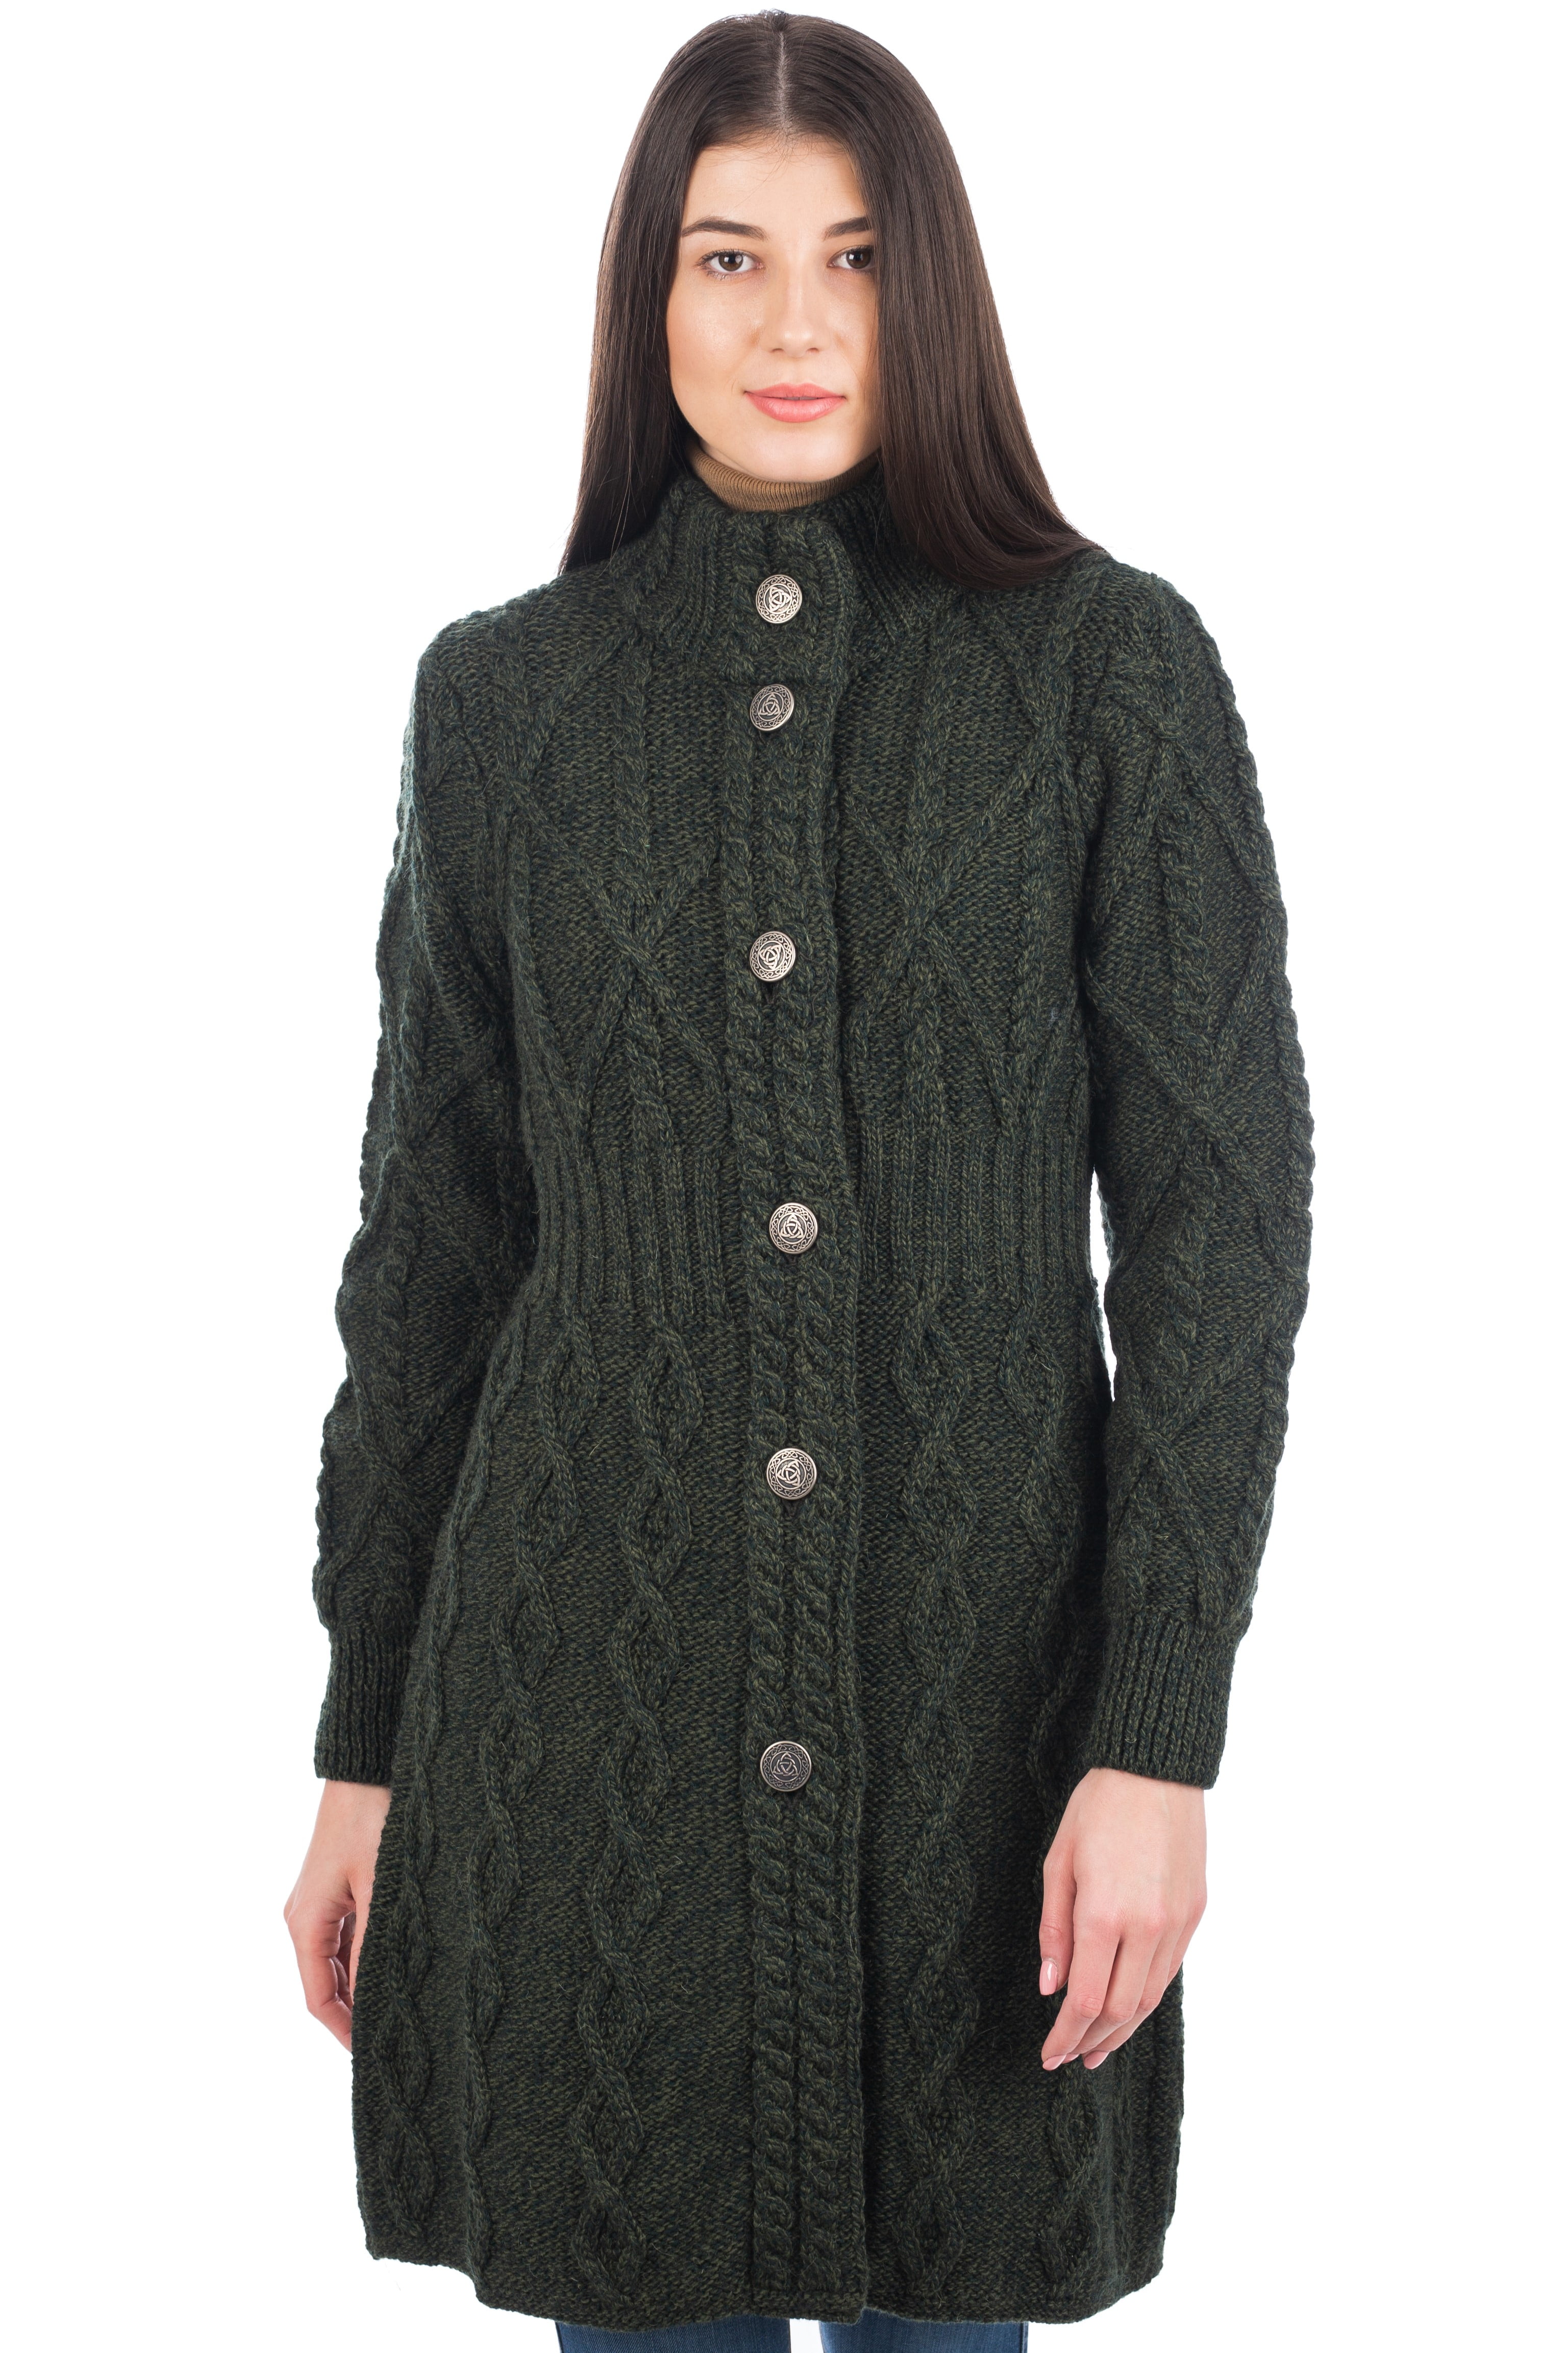 SAOL 100% Merino Wool Irish Cardigan Women's Aran Long Outdoor Cable ...